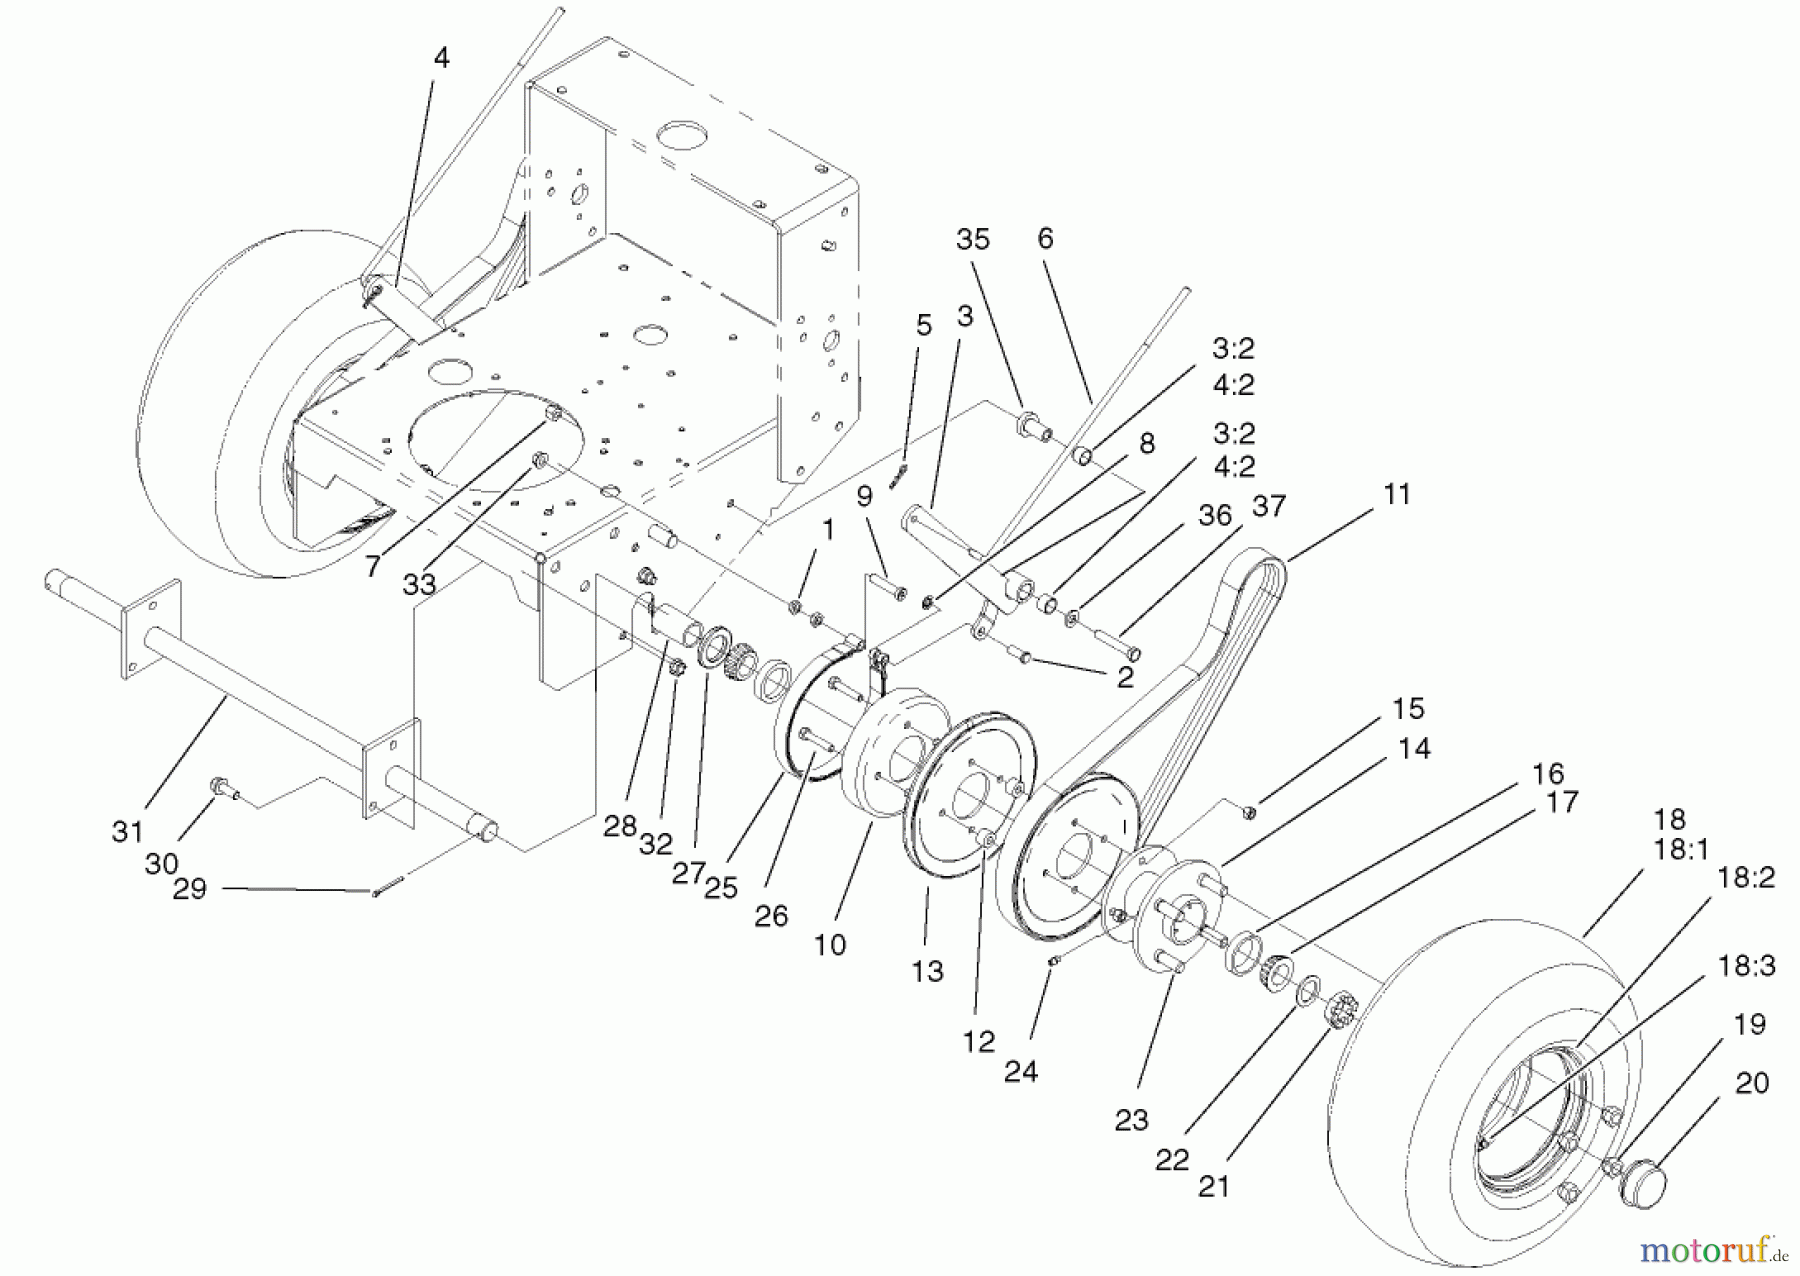  Rasenmäher für Großflächen 30334 - Toro Mid-Size ProLine Mower, Gear Drive, 17 hp, 52